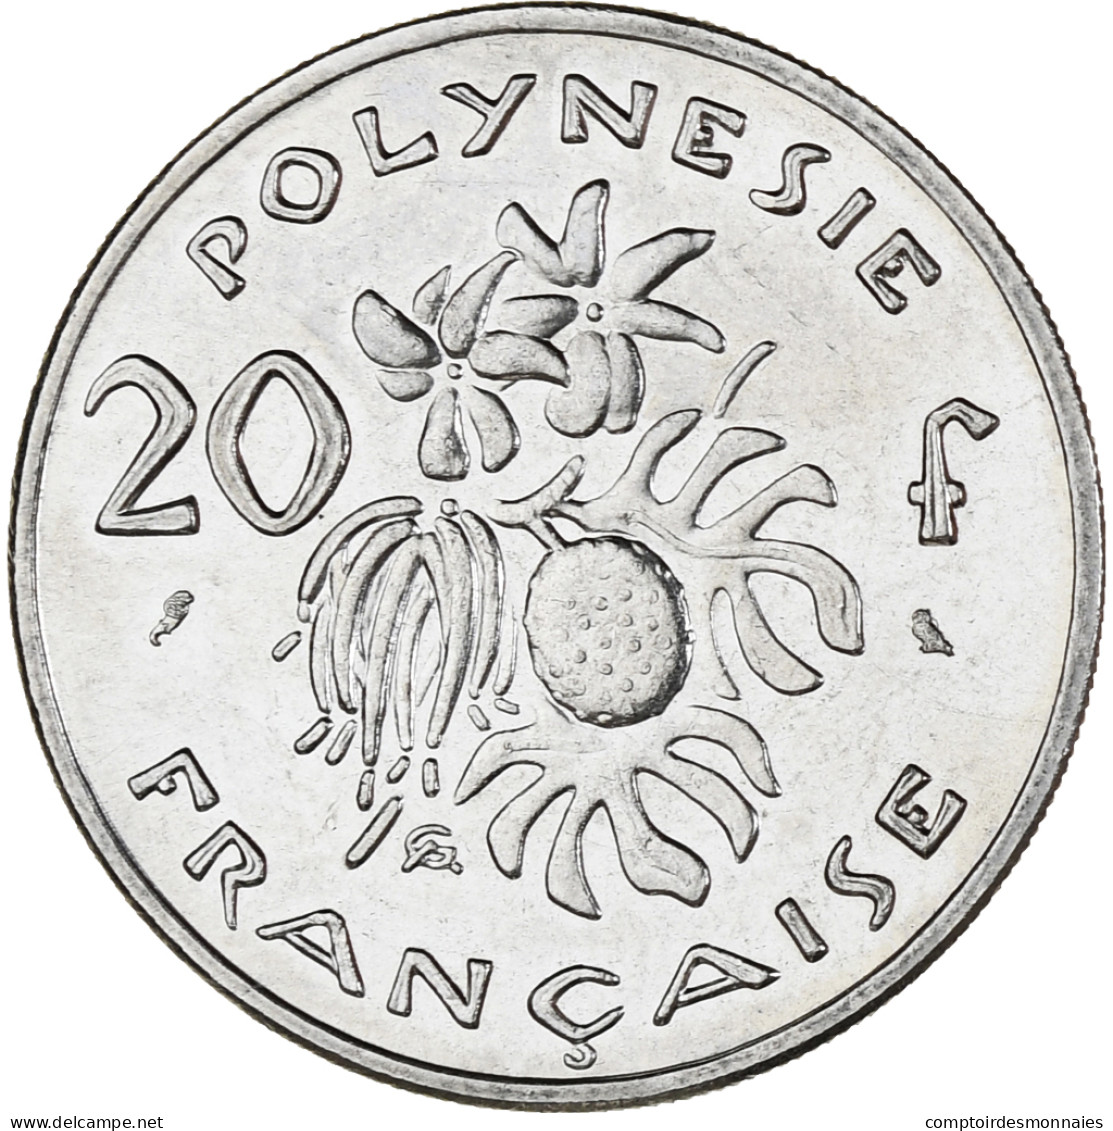 Monnaie, Polynésie Française, 20 Francs, 1972, Paris, SUP, Nickel, KM:9 - Französisch-Polynesien